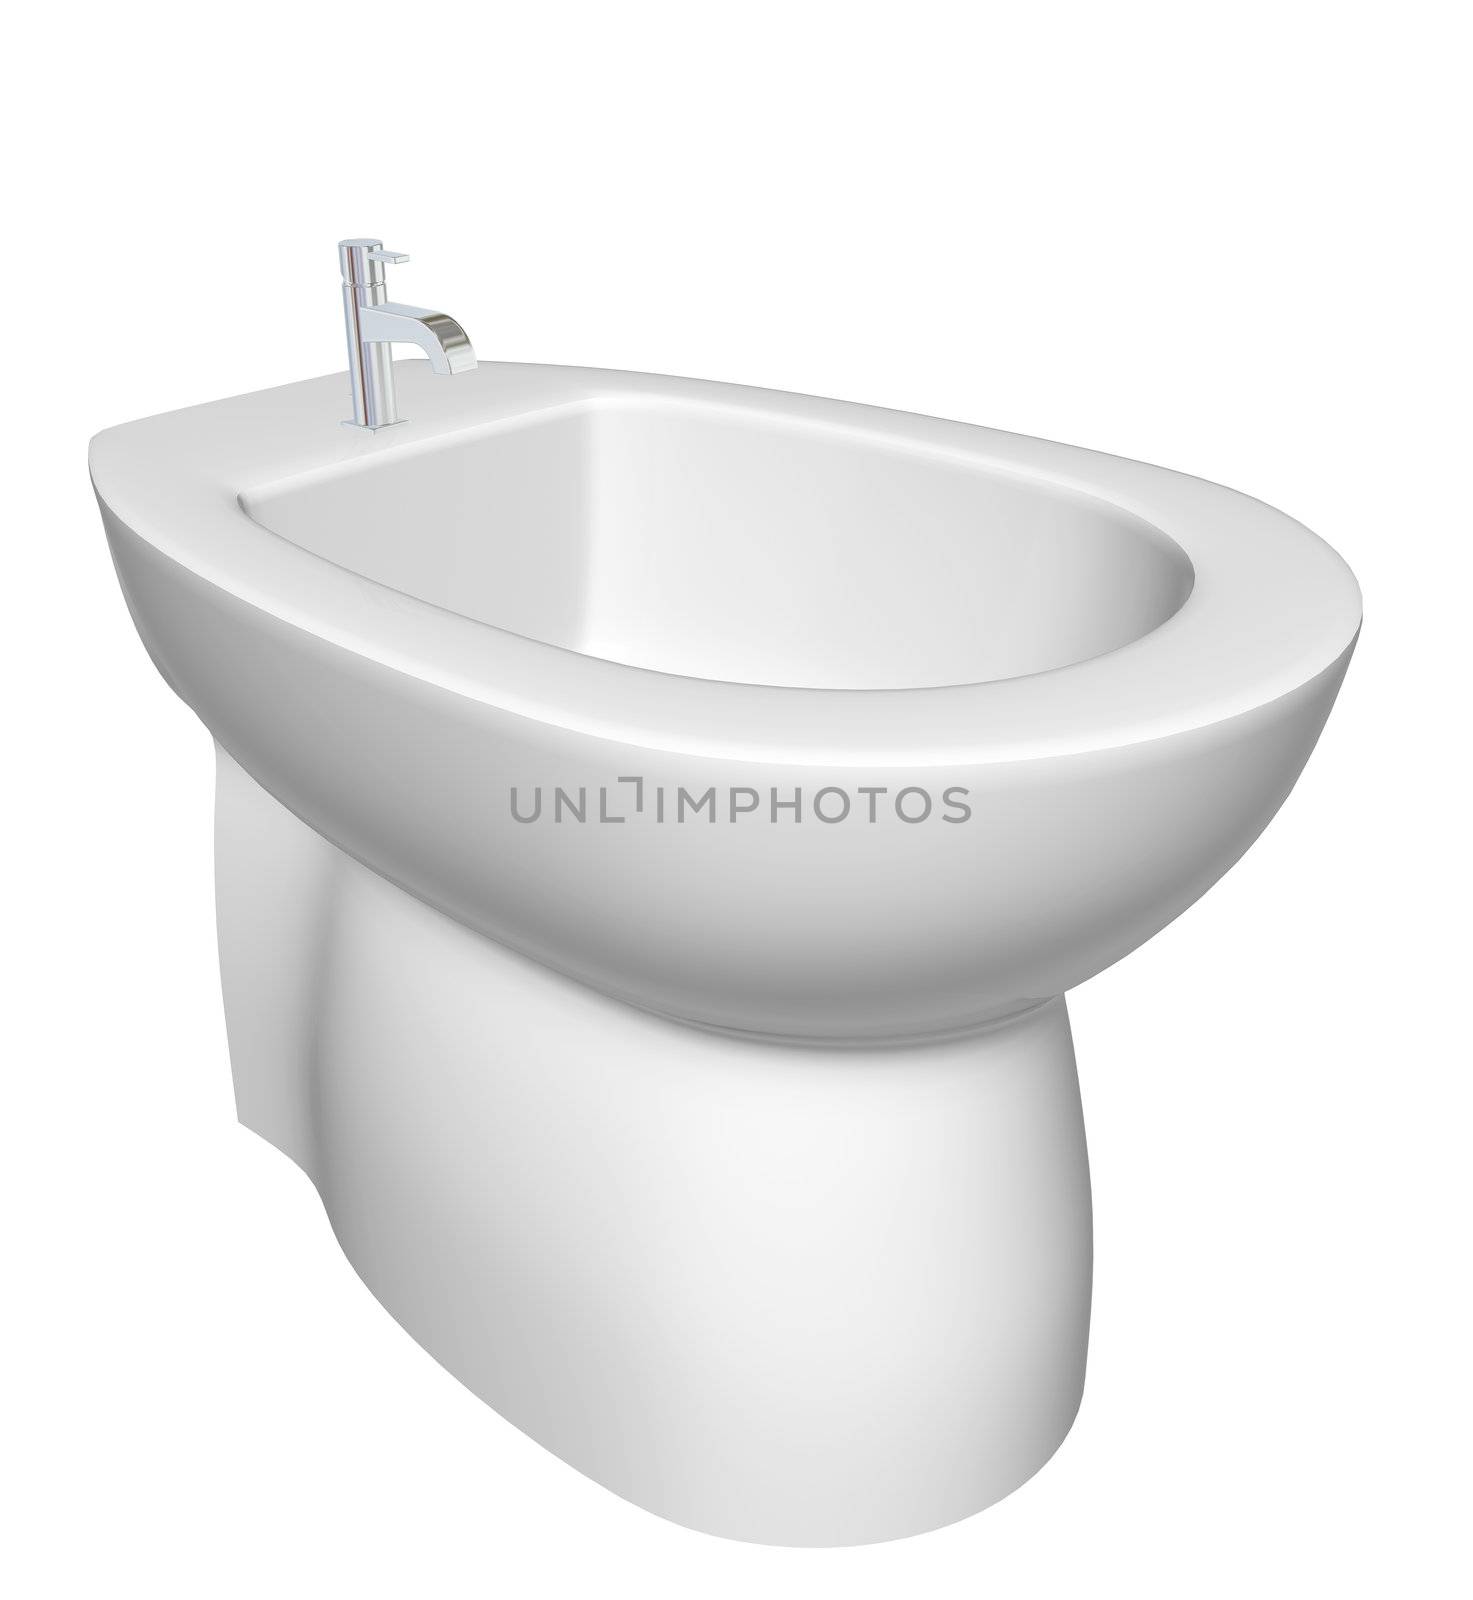 Round bidet design for bathrooms. 3D illustration by Morphart